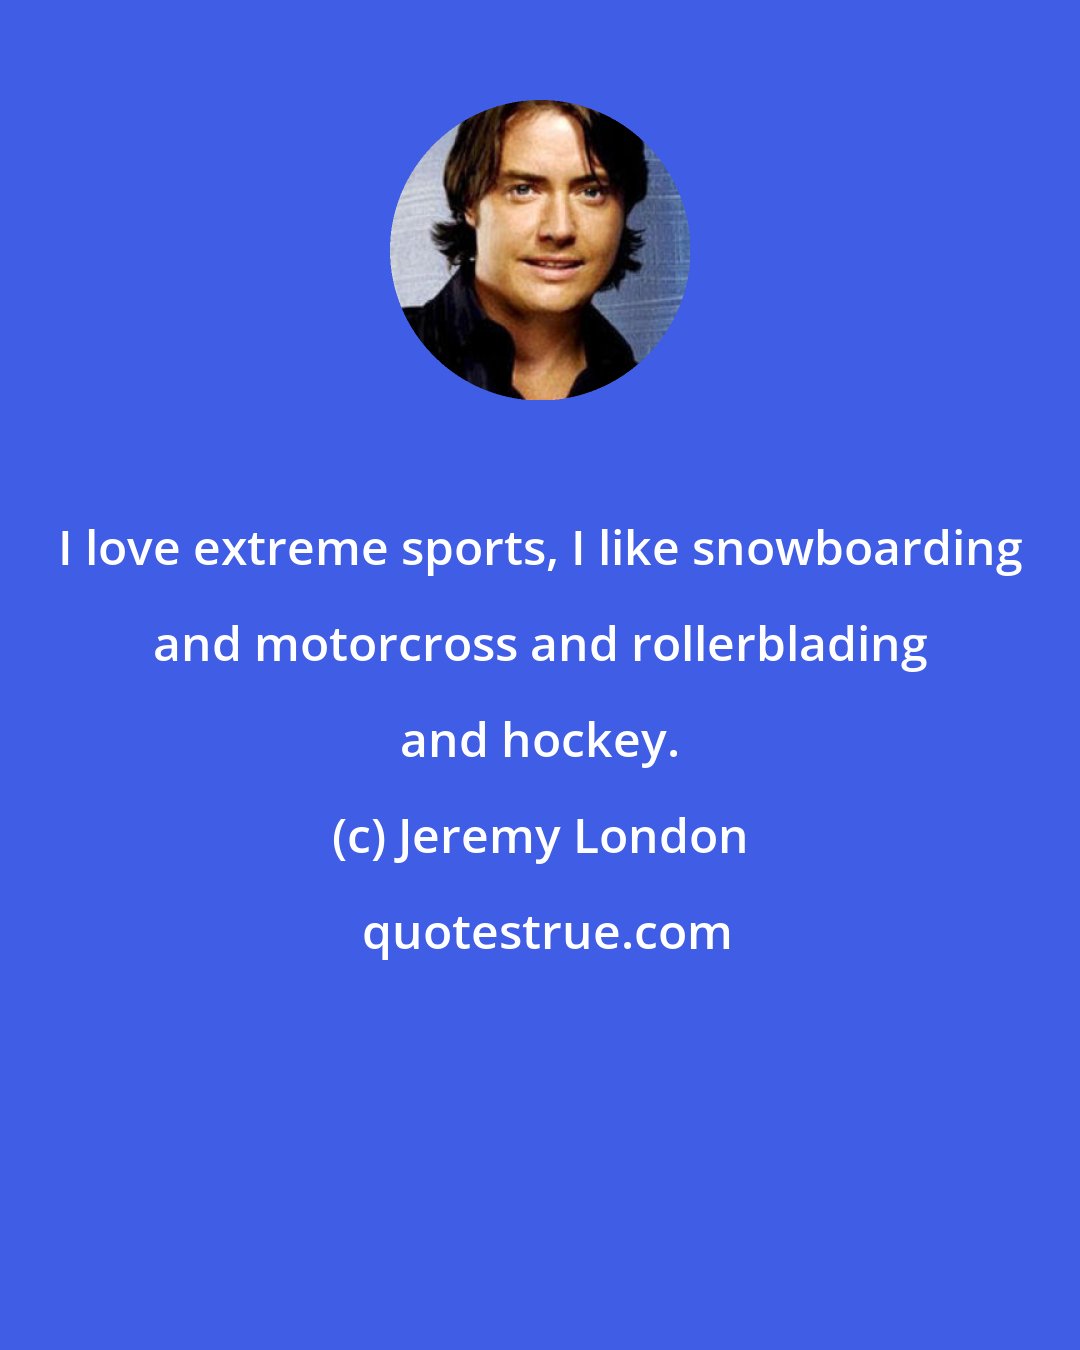 Jeremy London: I love extreme sports, I like snowboarding and motorcross and rollerblading and hockey.